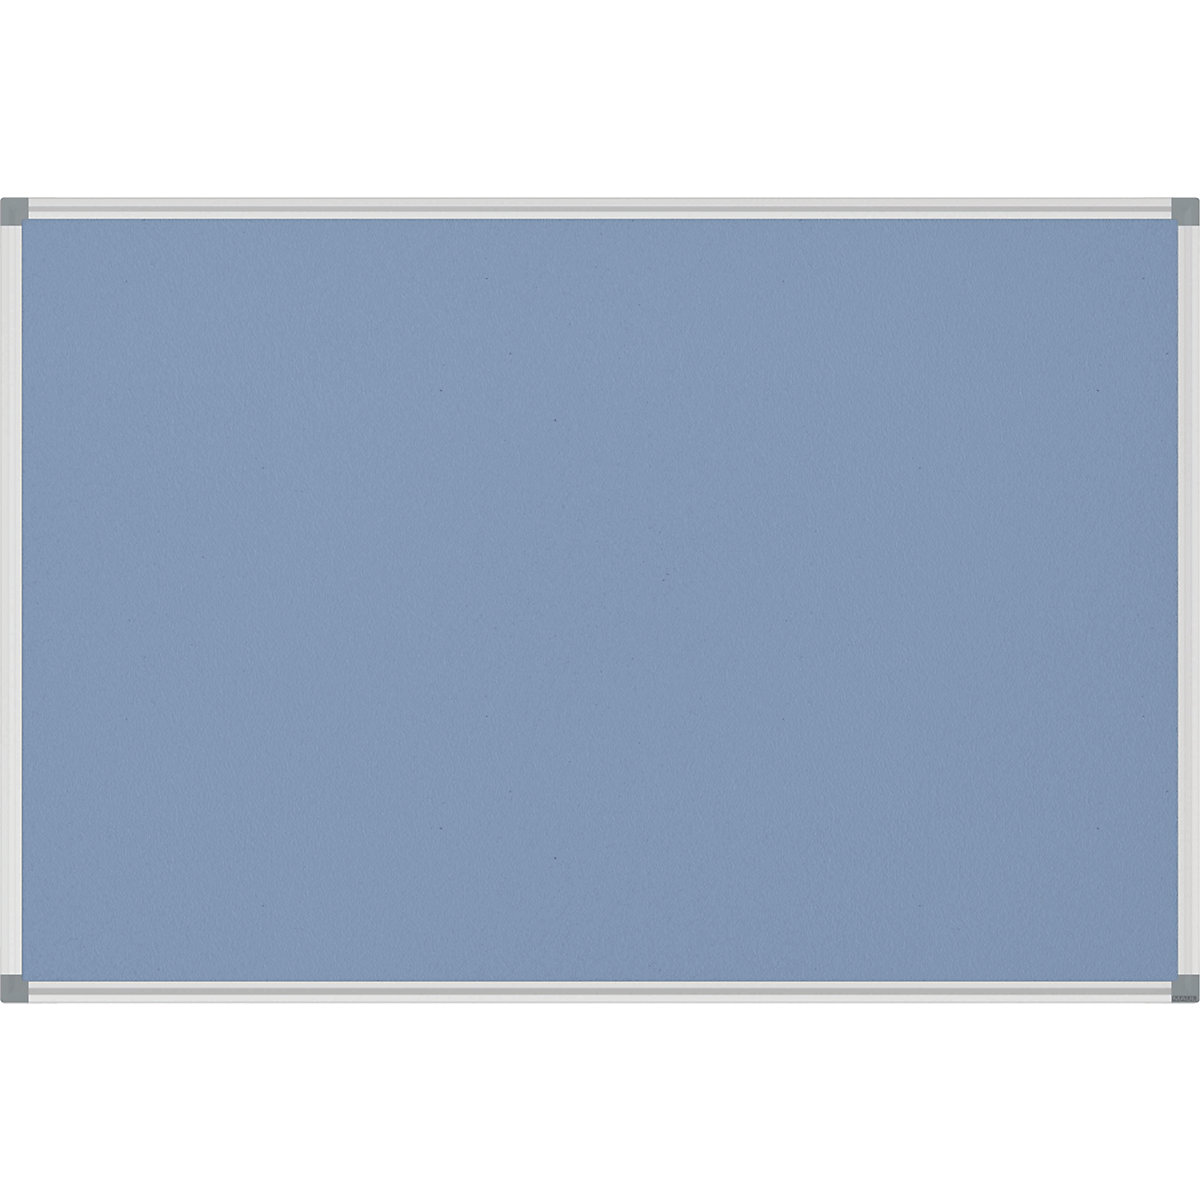 STANDARD pin board – MAUL, felt cover, light blue, WxH 900 x 600 mm-3